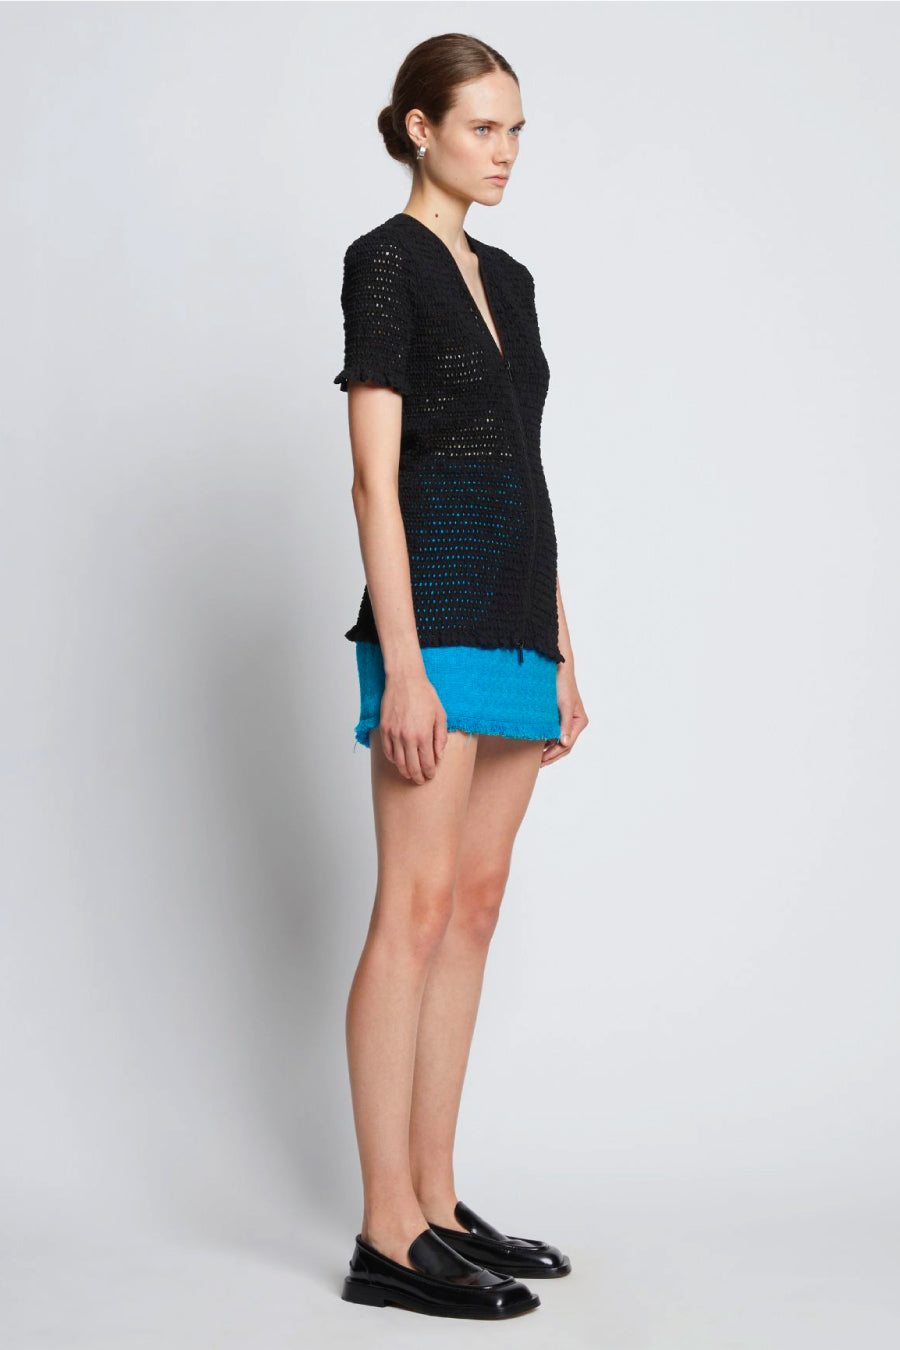 Proenza Schouler White Label Tweed Mini Skirt - Dark Turquoise